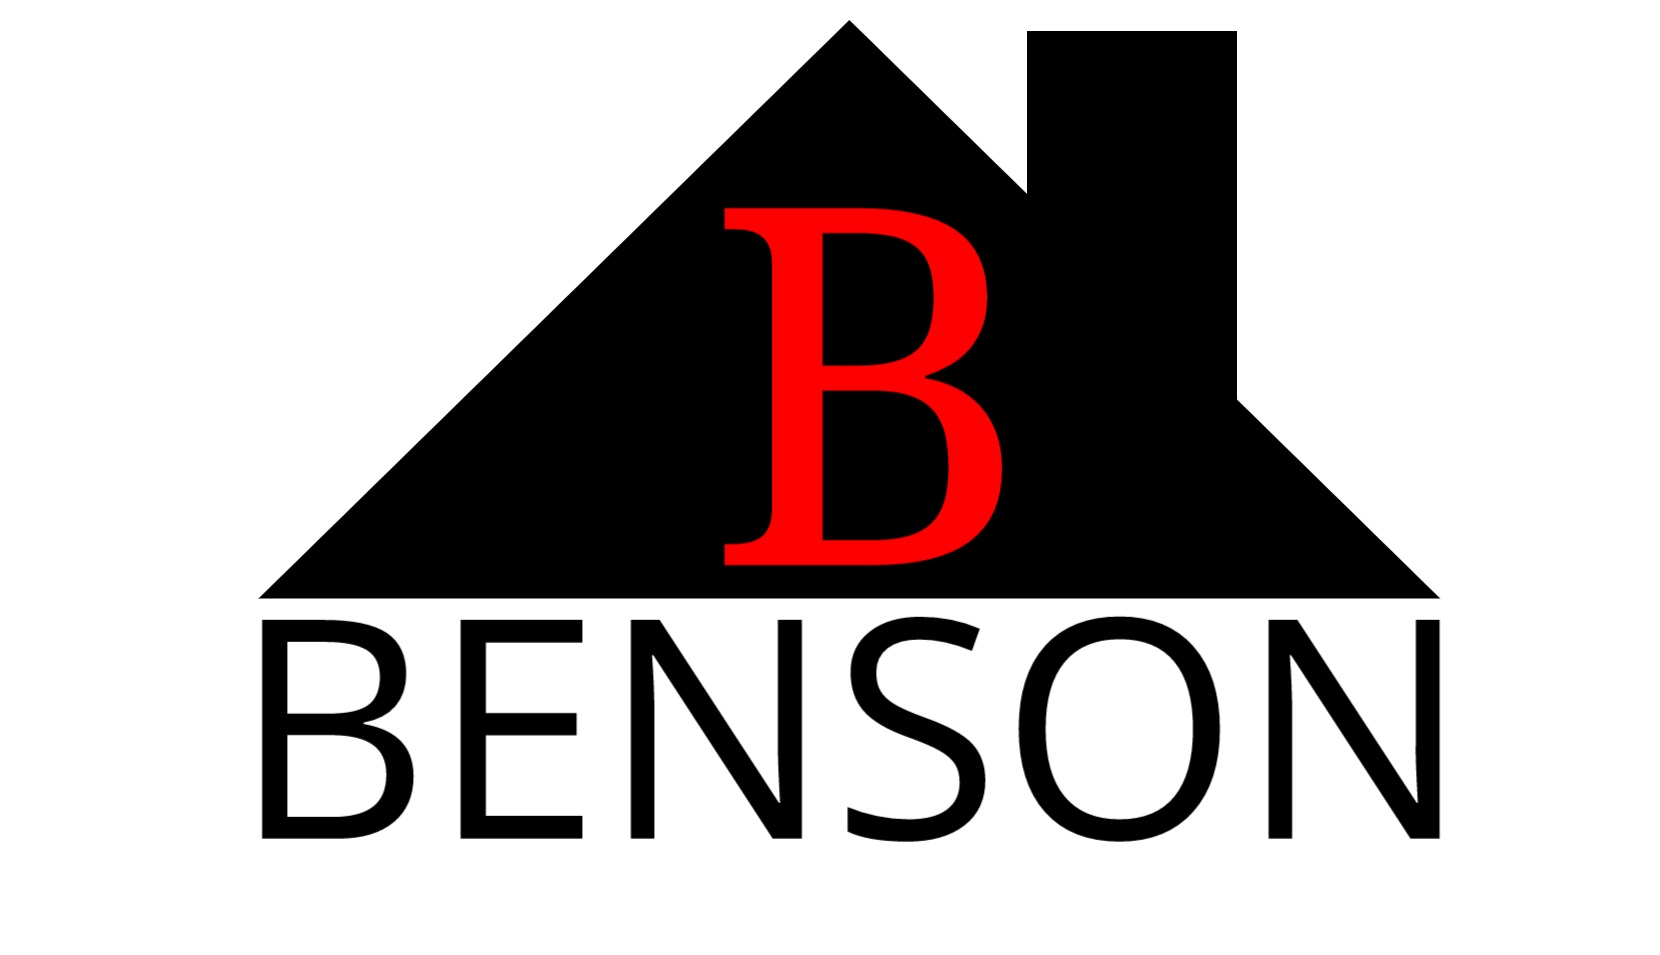 Benson house logo JPEG.jpg